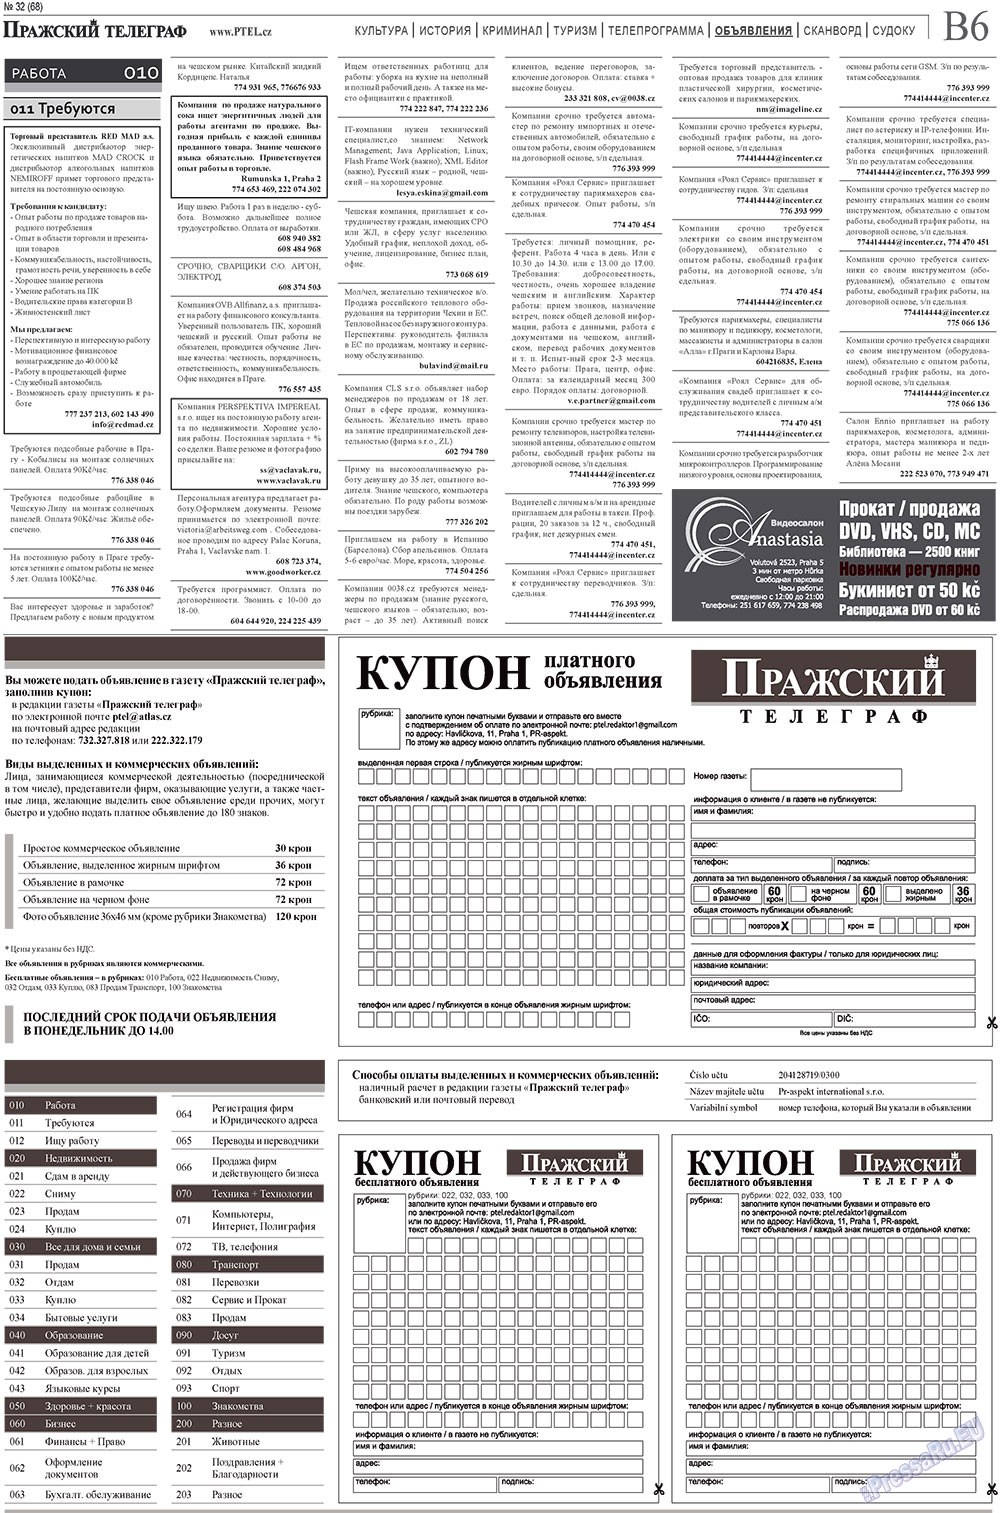 Пражский телеграф, газета. 2010 №32 стр.14